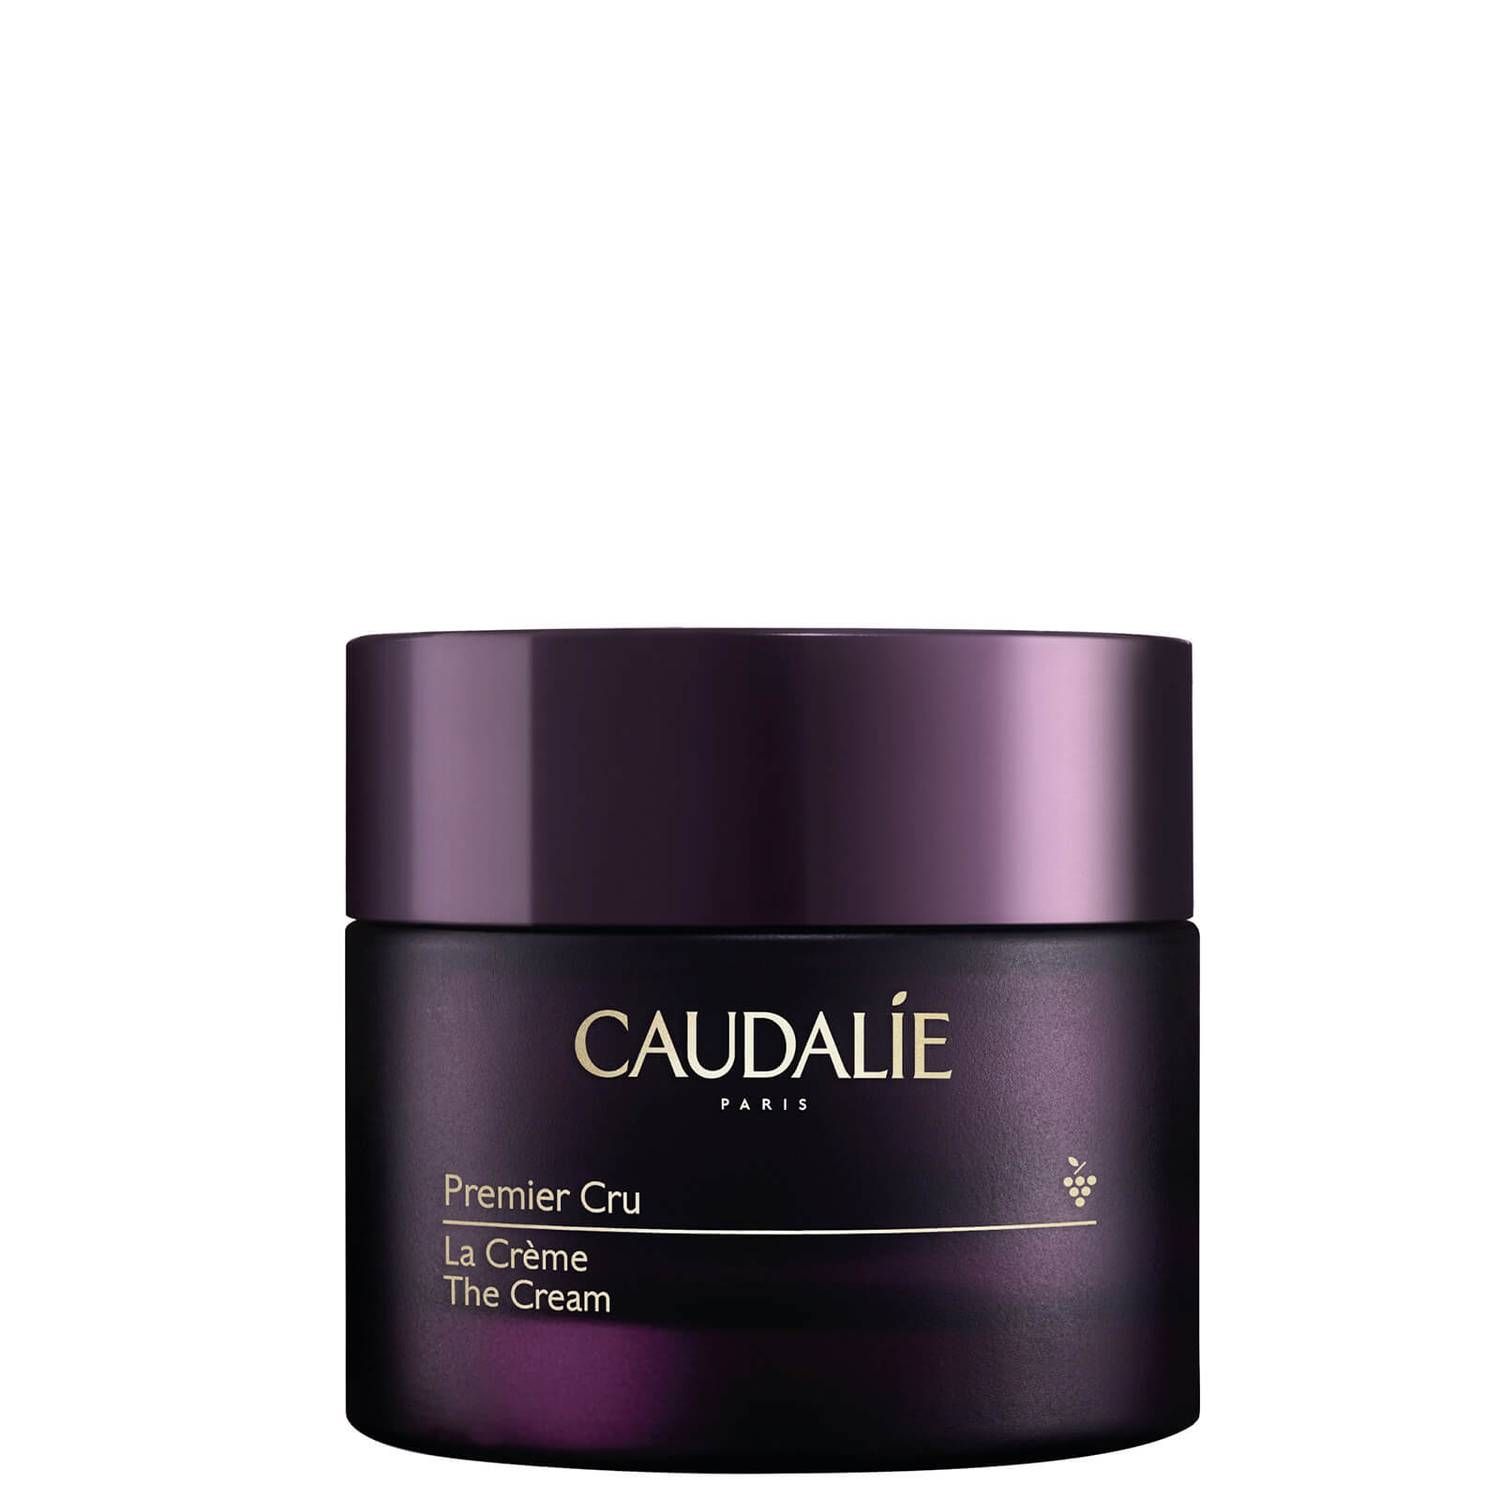 Caudalie Premier Cru Anti-Aging Cream Moisturiser 50ml | Look Fantastic (ROW)